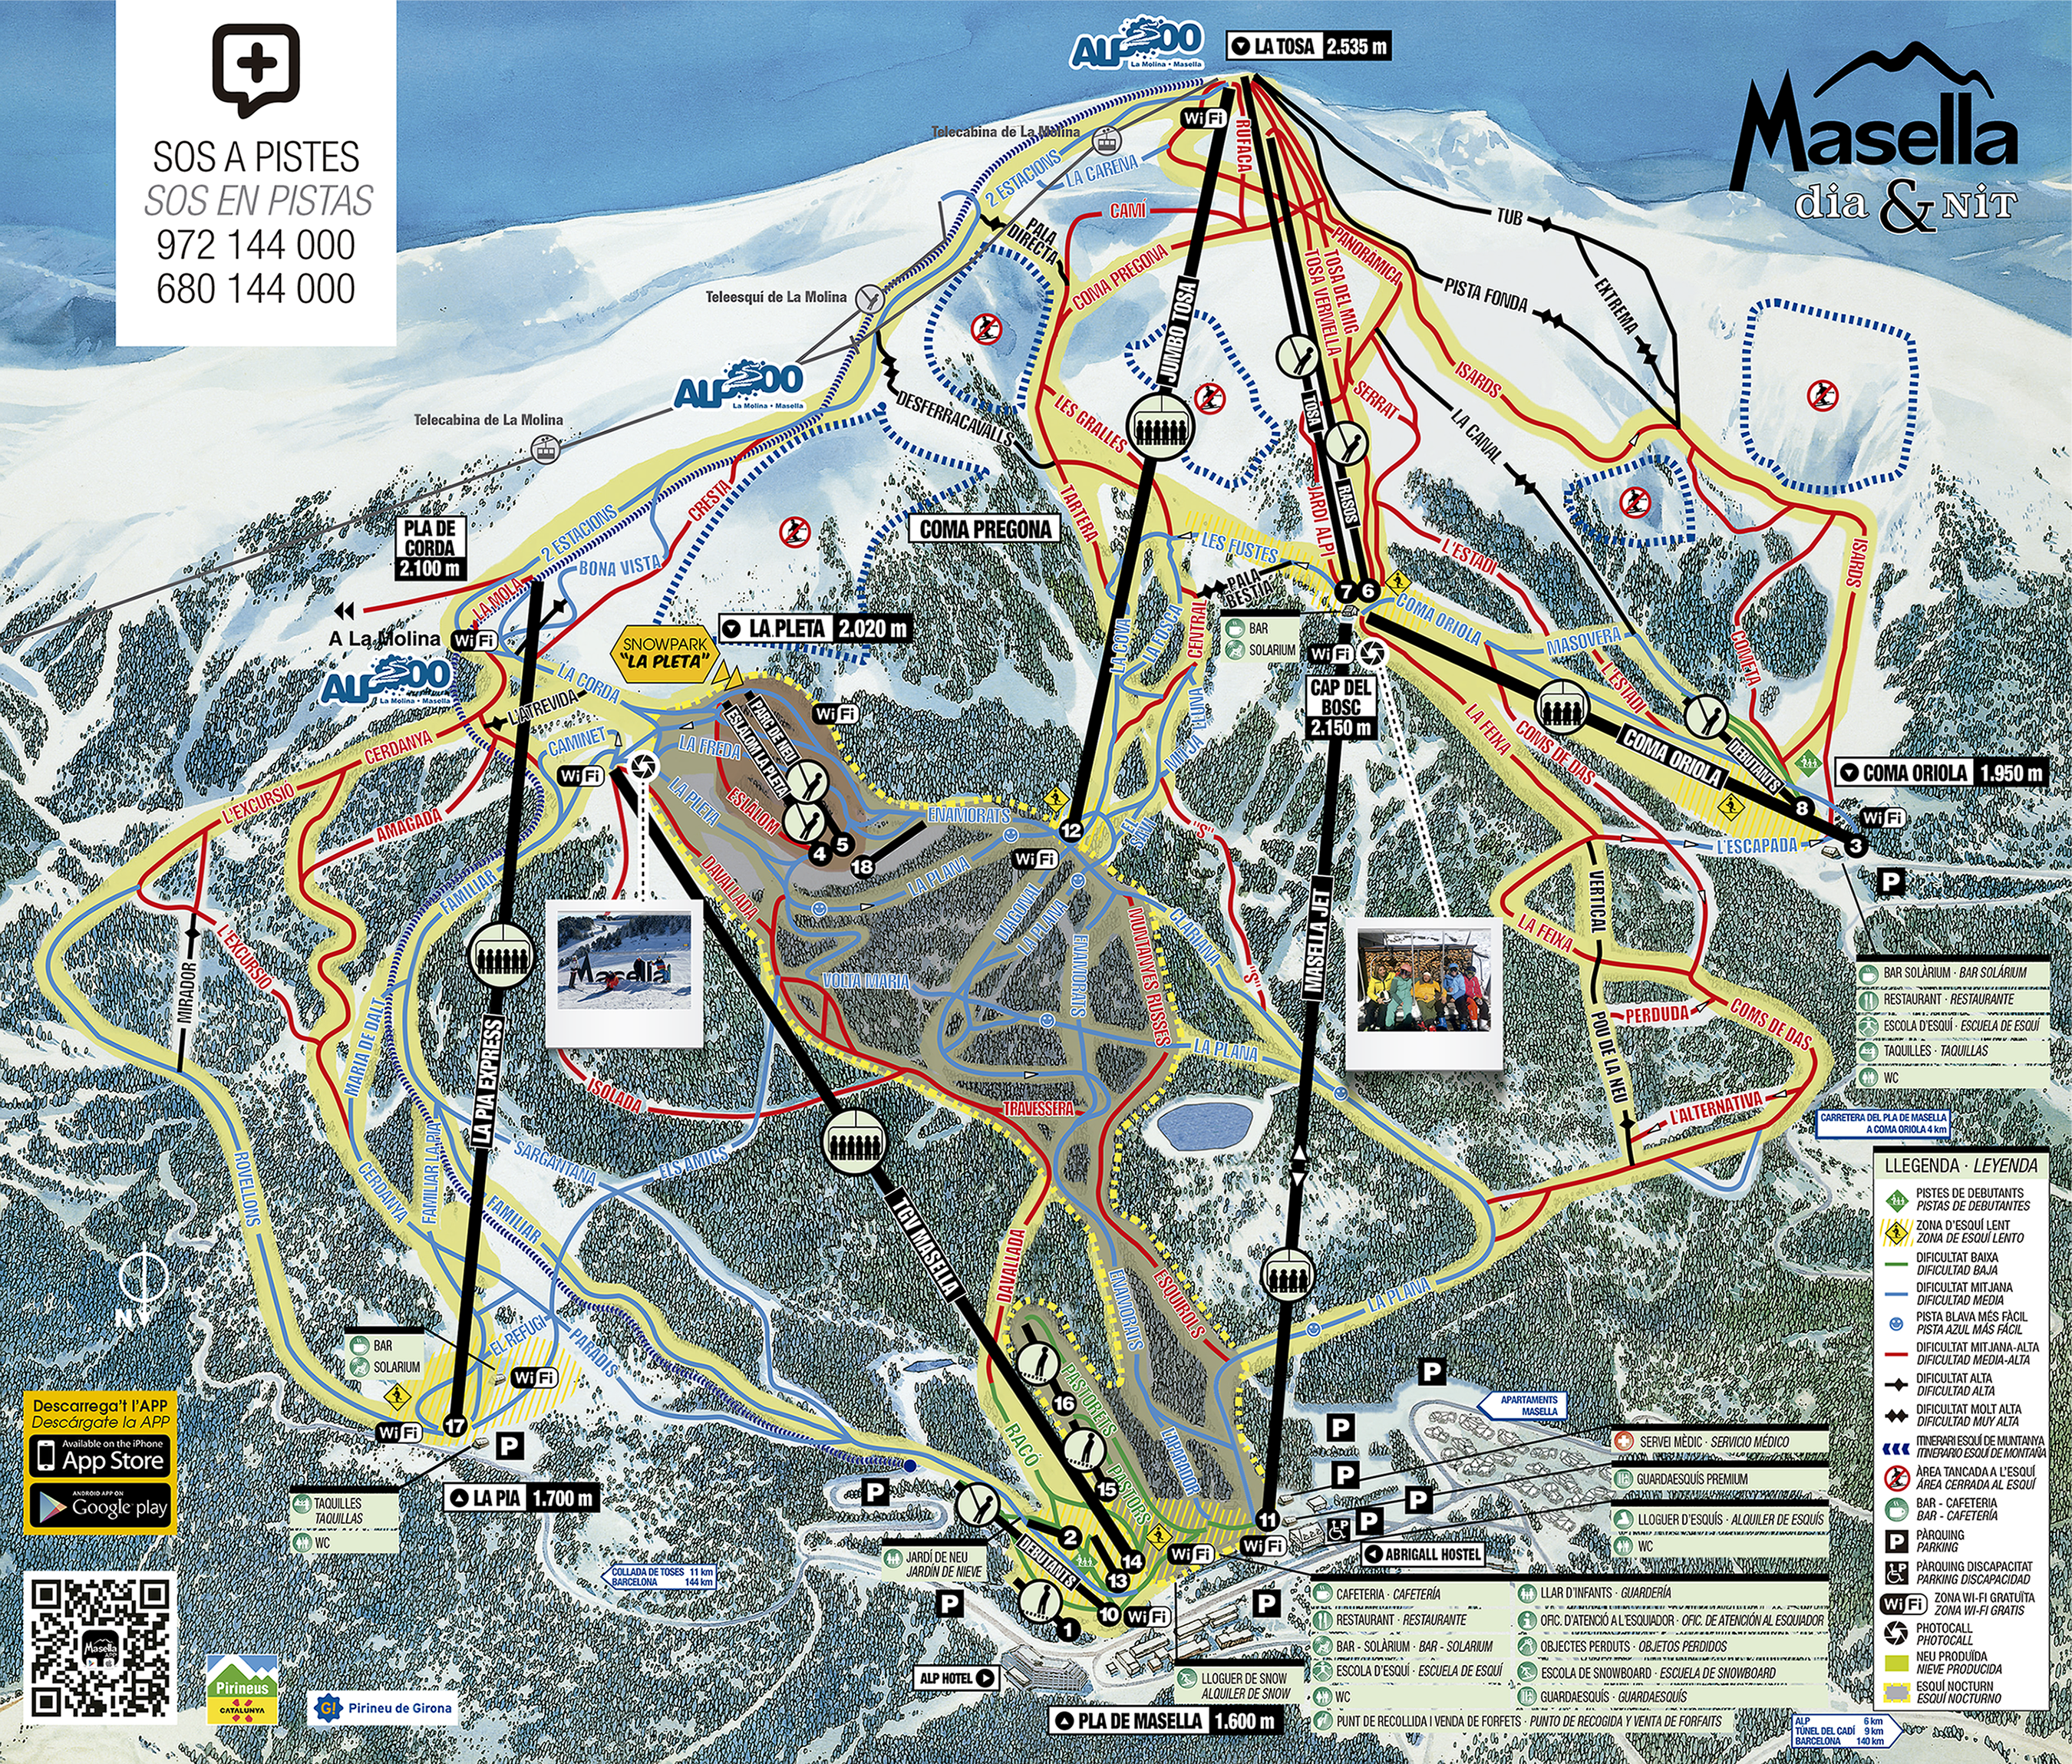 Masella Ski Resort trail map